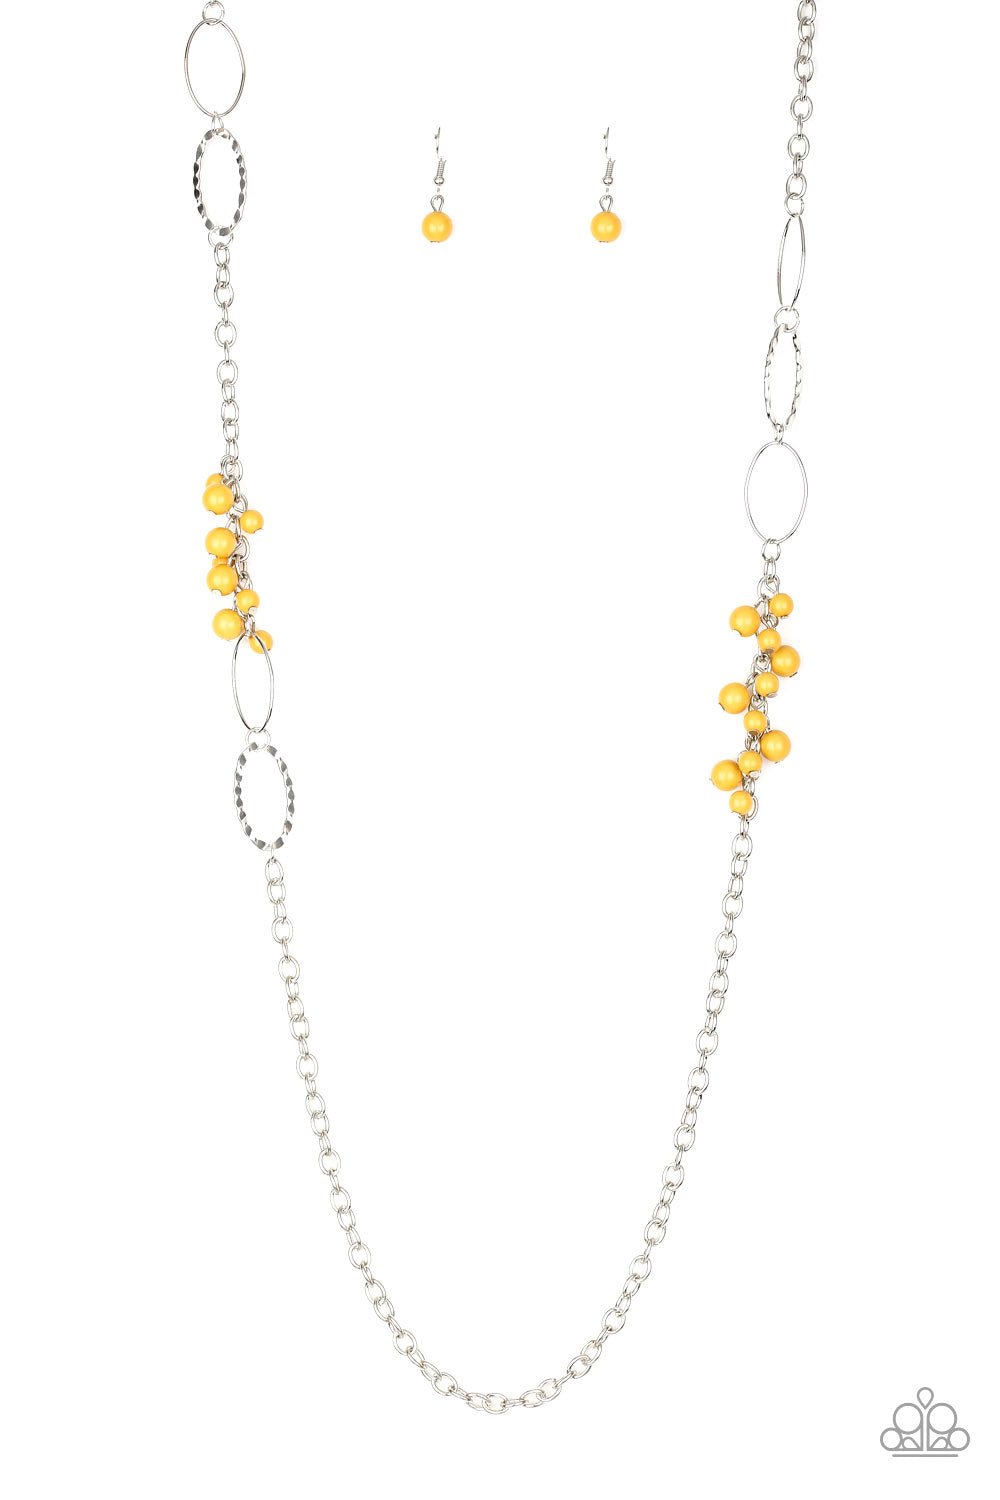 Flirty Foxtrot - Yellow necklace